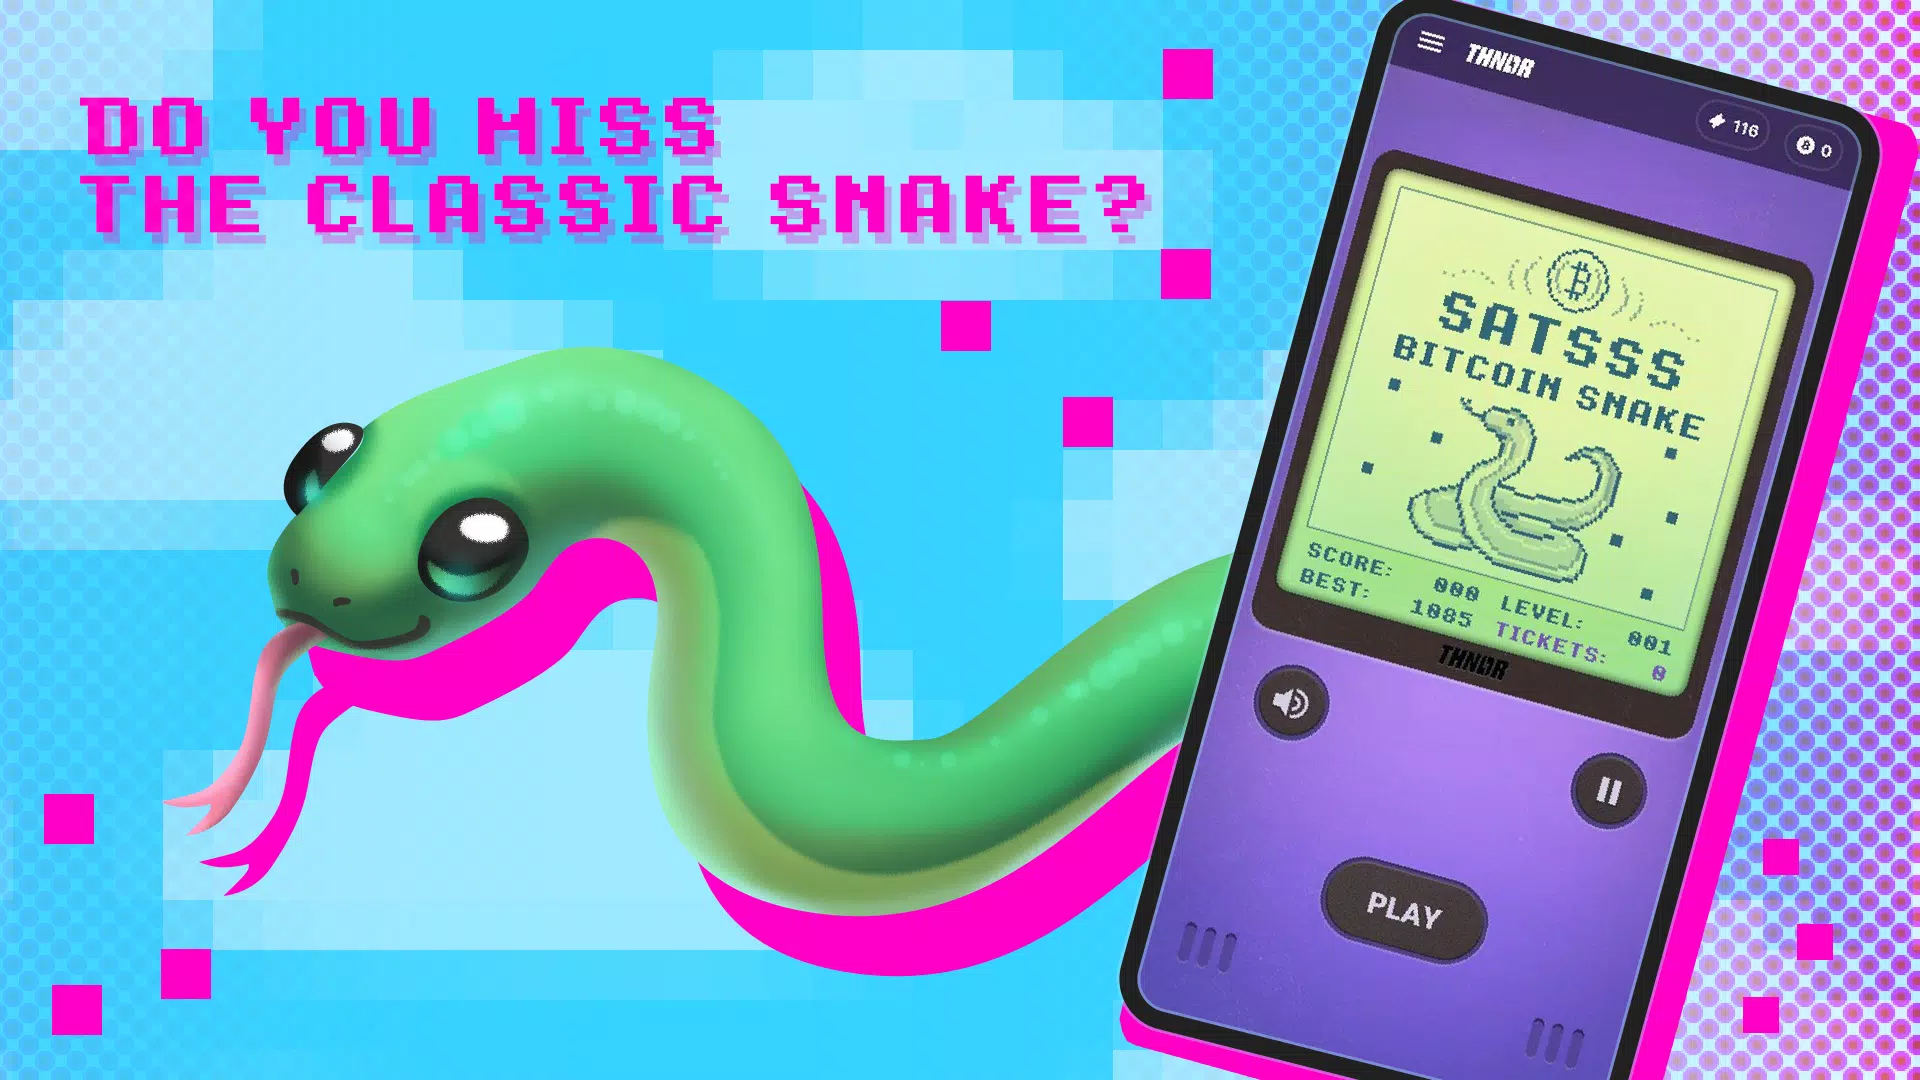 Baixar Snake.io 1.16 Android - Download APK Grátis